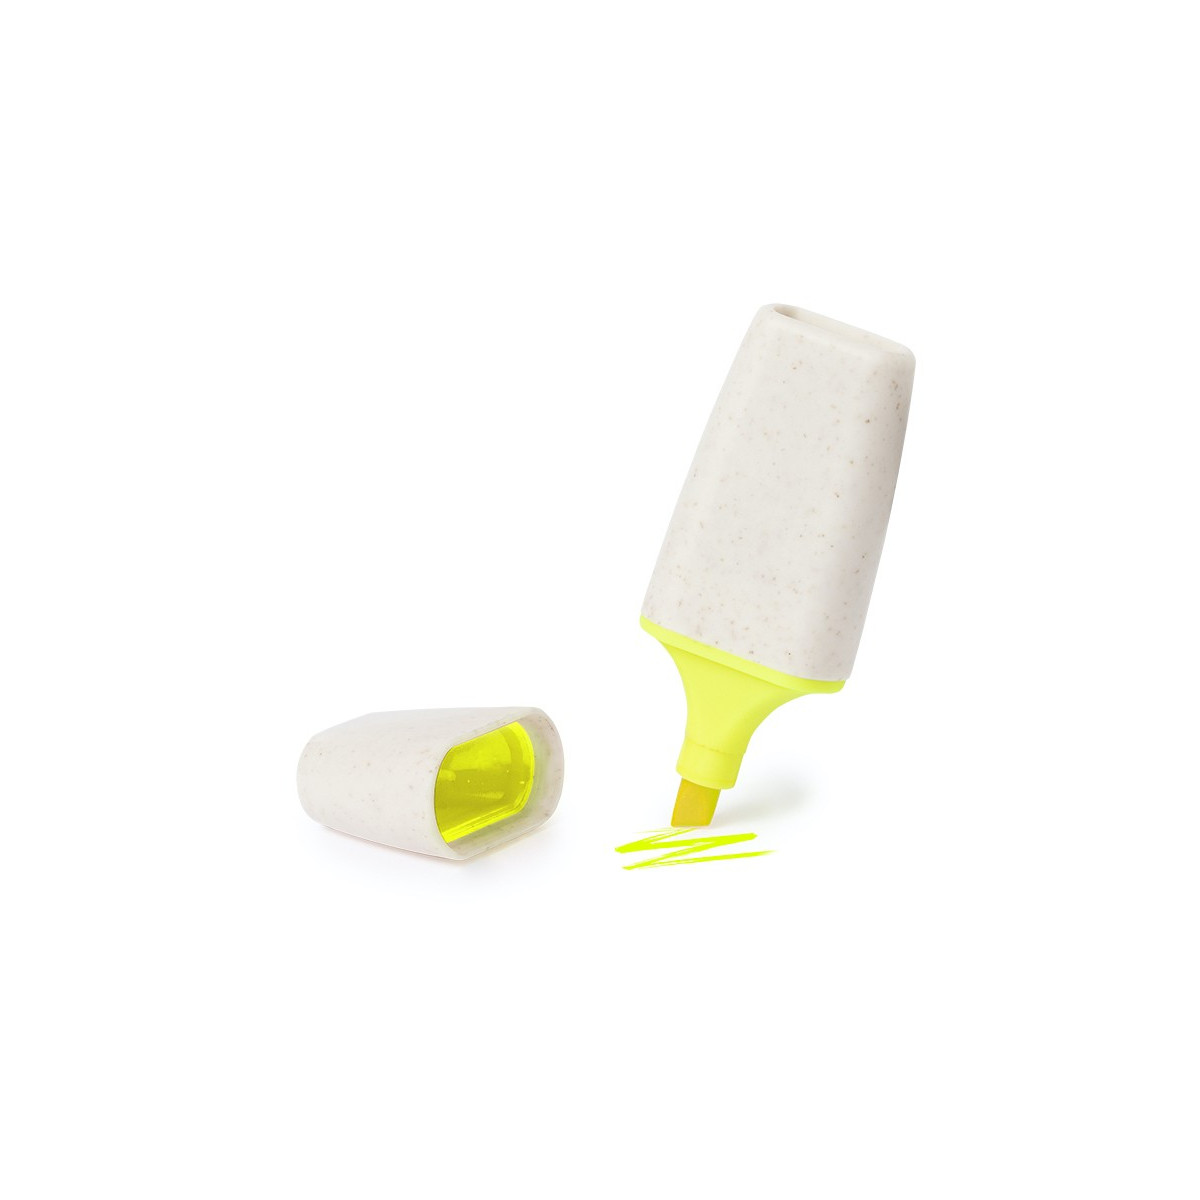 Pennarello fluorescente con inchiostro giallo